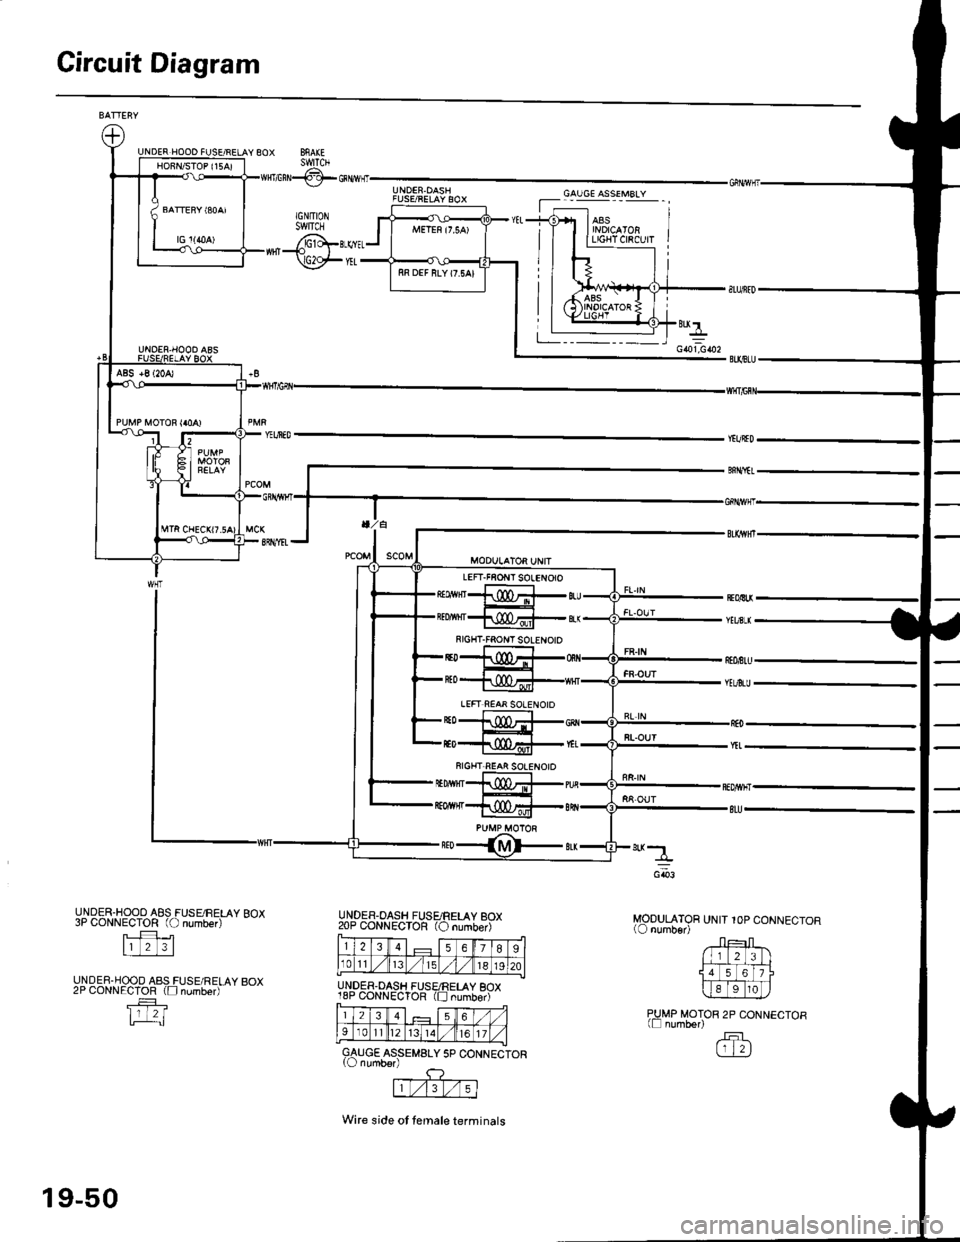 HONDA CIVIC 1998 6.G Workshop Manual Gircuit Diagram
MOOULATOR UNIT IOP CONNECTOR
zrJrF!_lll 2 3ll
14TiEltl
c@4
PIMP MOTOR 2P CONNECTOR(Ll number)fFlGTN
UNDER.HOOO A8S FUSE,/FELAY BOX3P CONNECTOR (O number)
| 2 3l
UNDER.HOOD AAS FUSE/REL